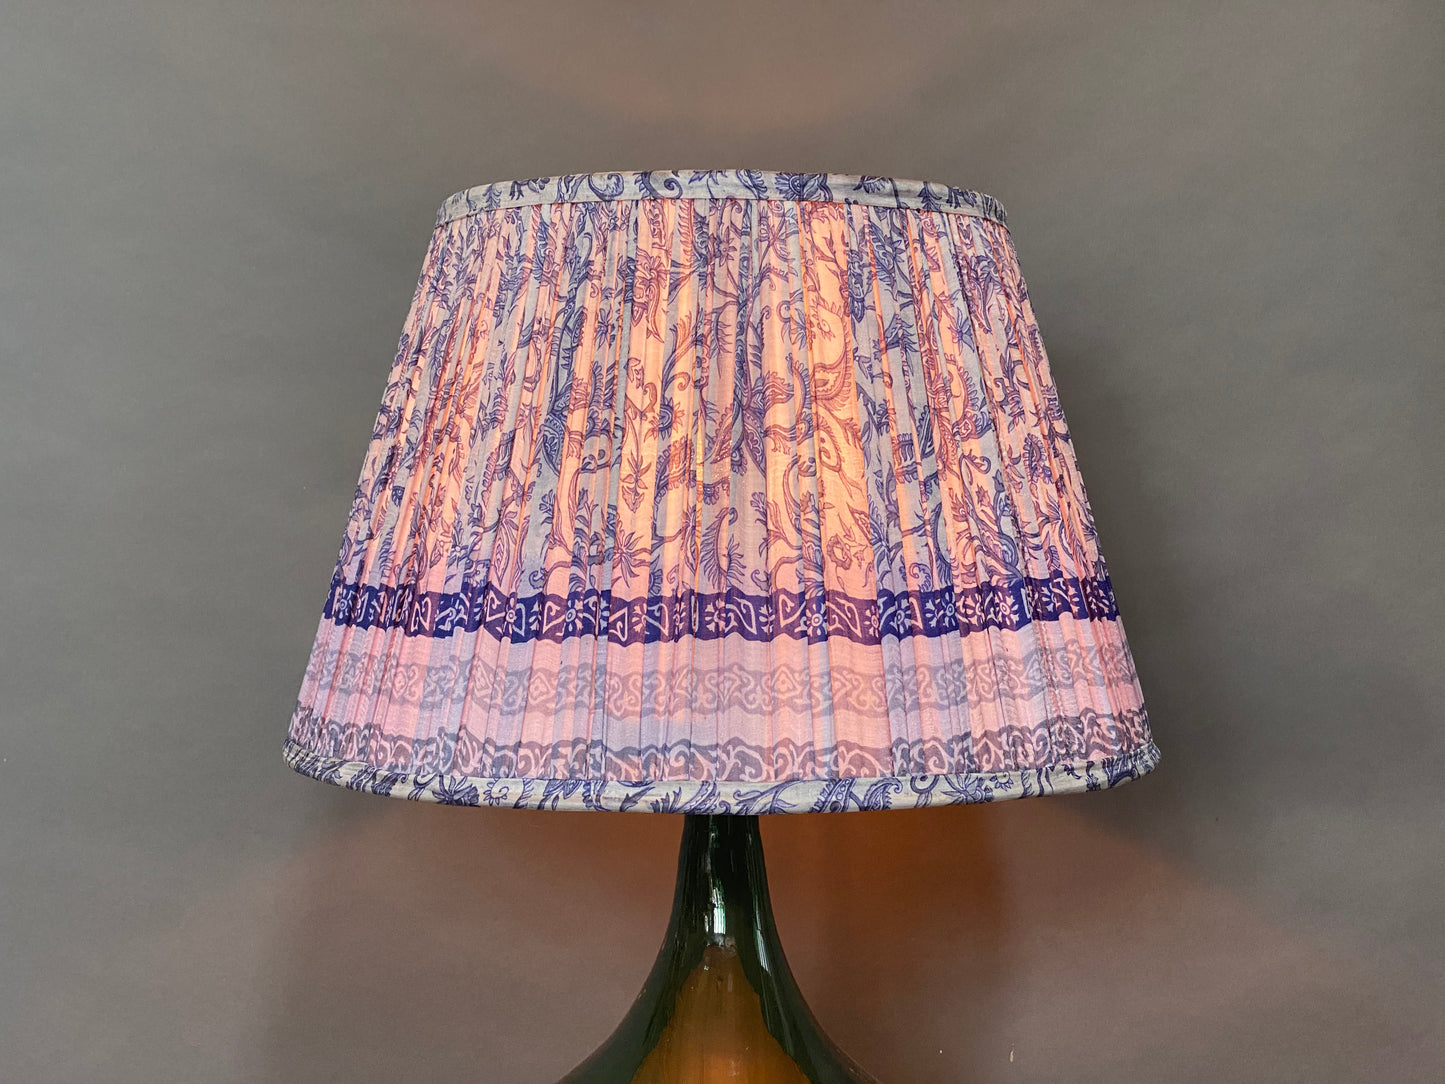 Royal Blue Paisley silk lampshade shown lit